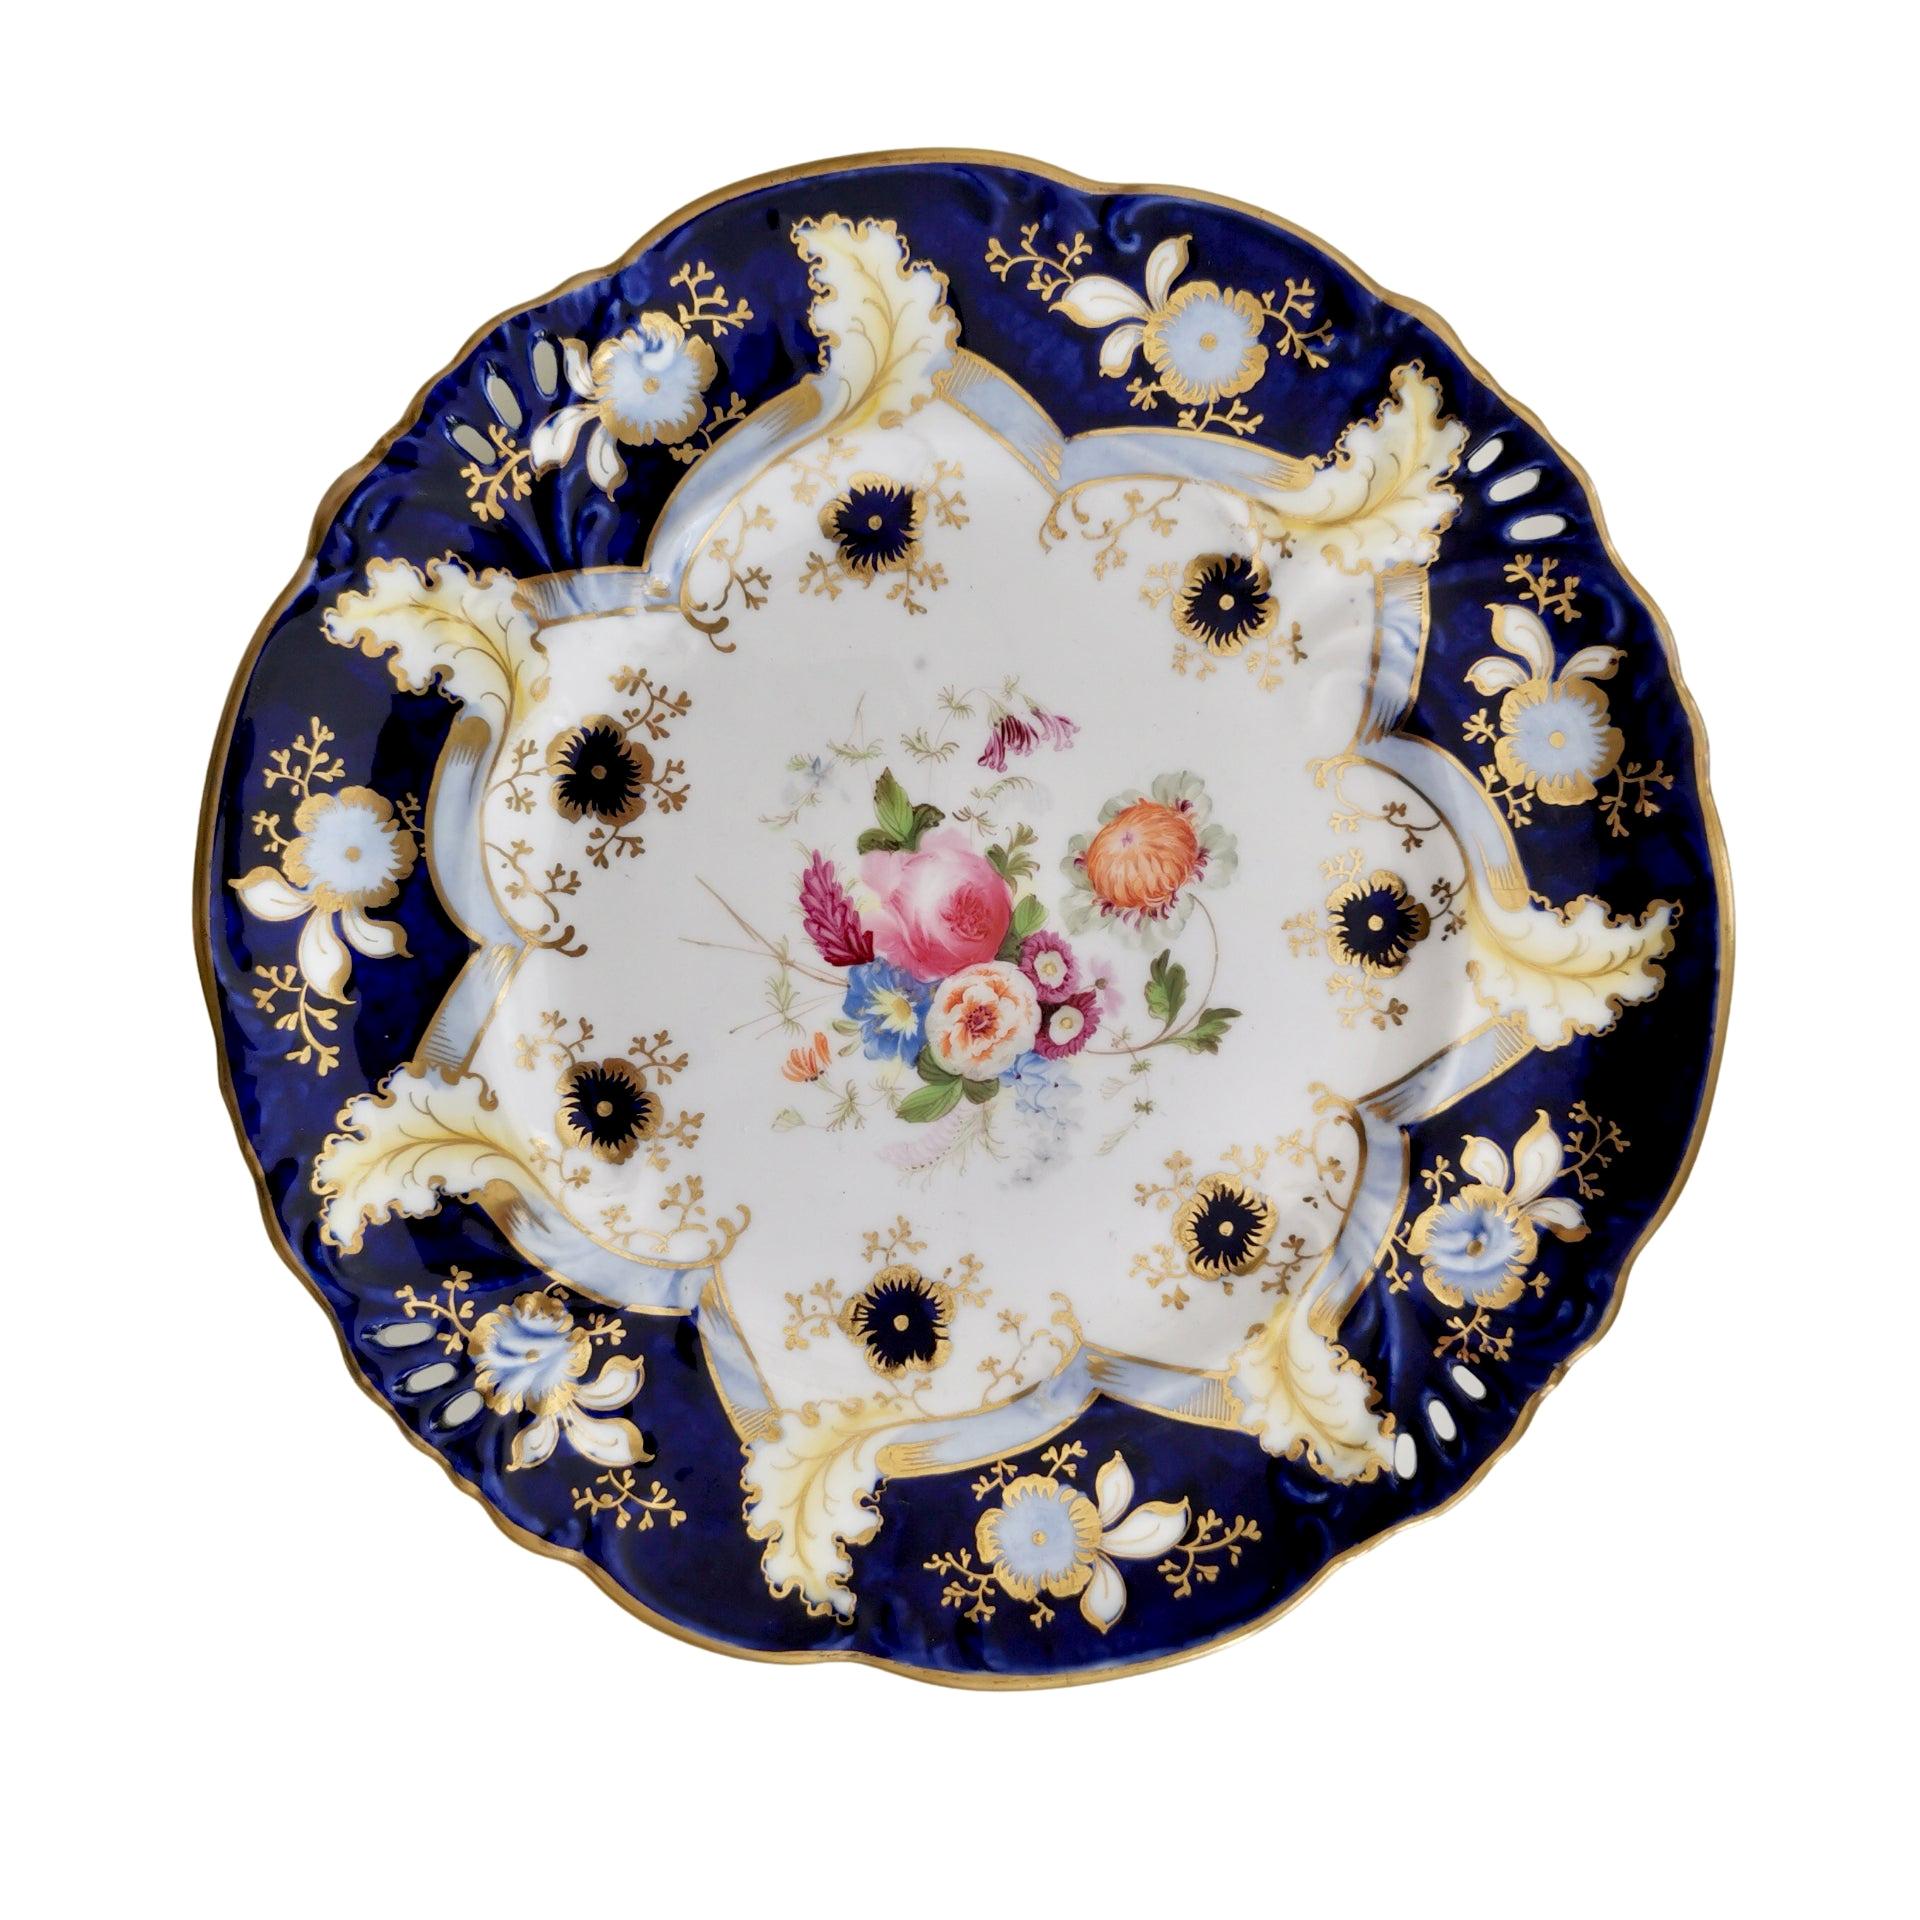 Samuel Alcock Porcelain Plate, Cobalt Blue, Flowers, Rococo Revival, ca 1845